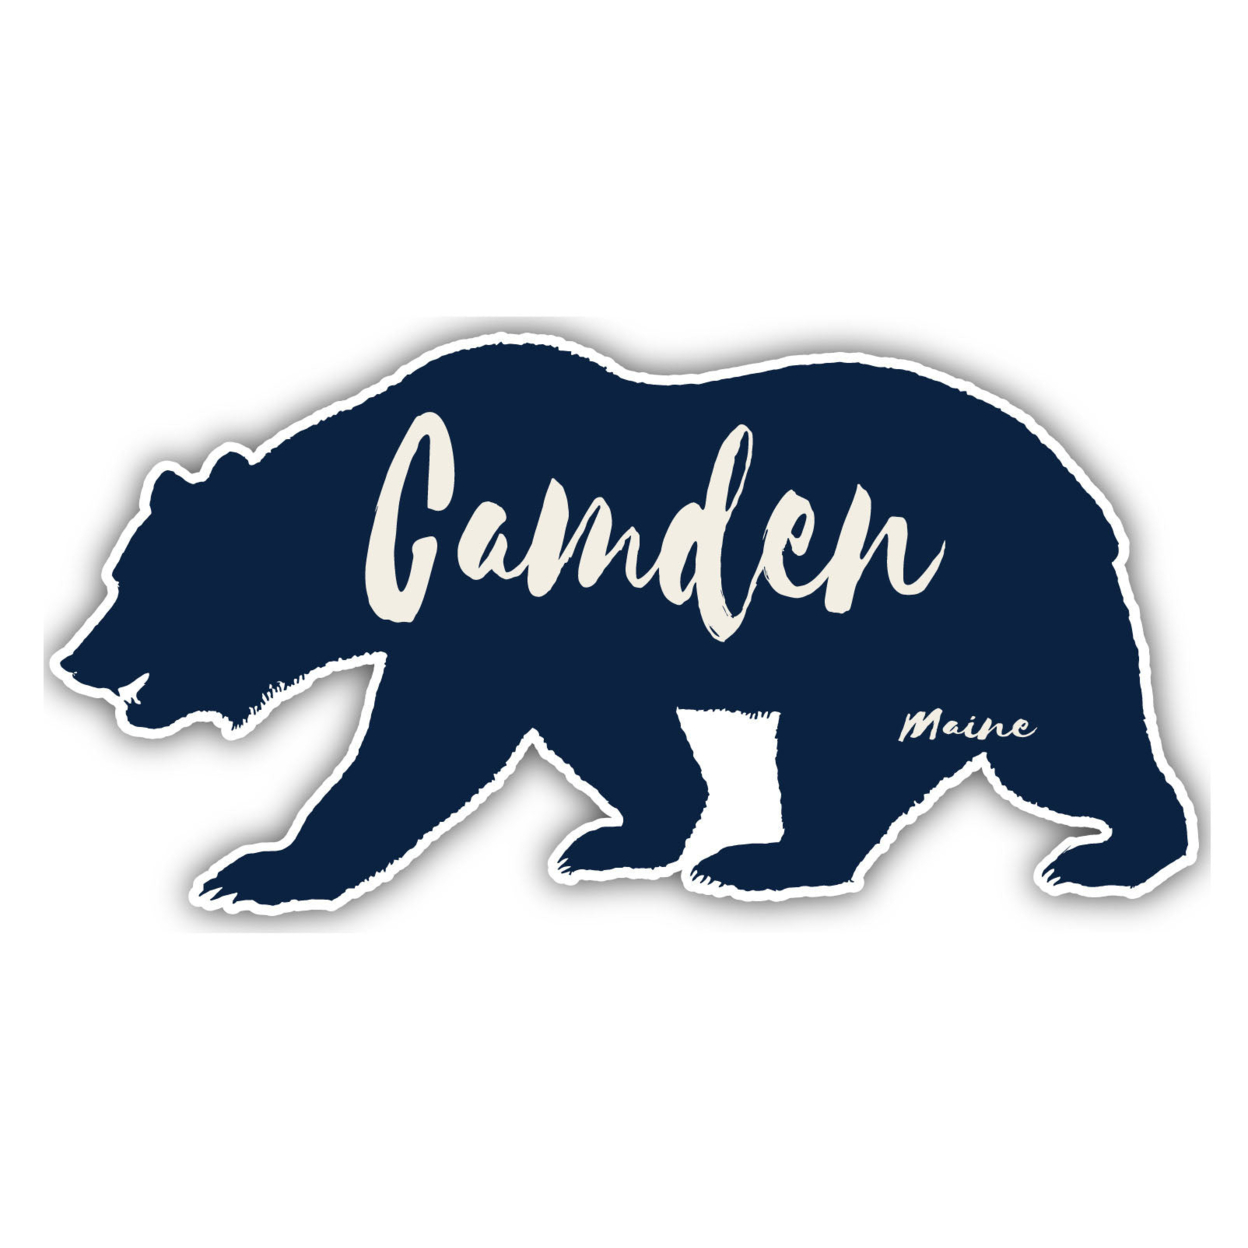 Camden Maine Souvenir Decorative Stickers (Choose Theme And Size) - Single Unit, 4-Inch, Tent